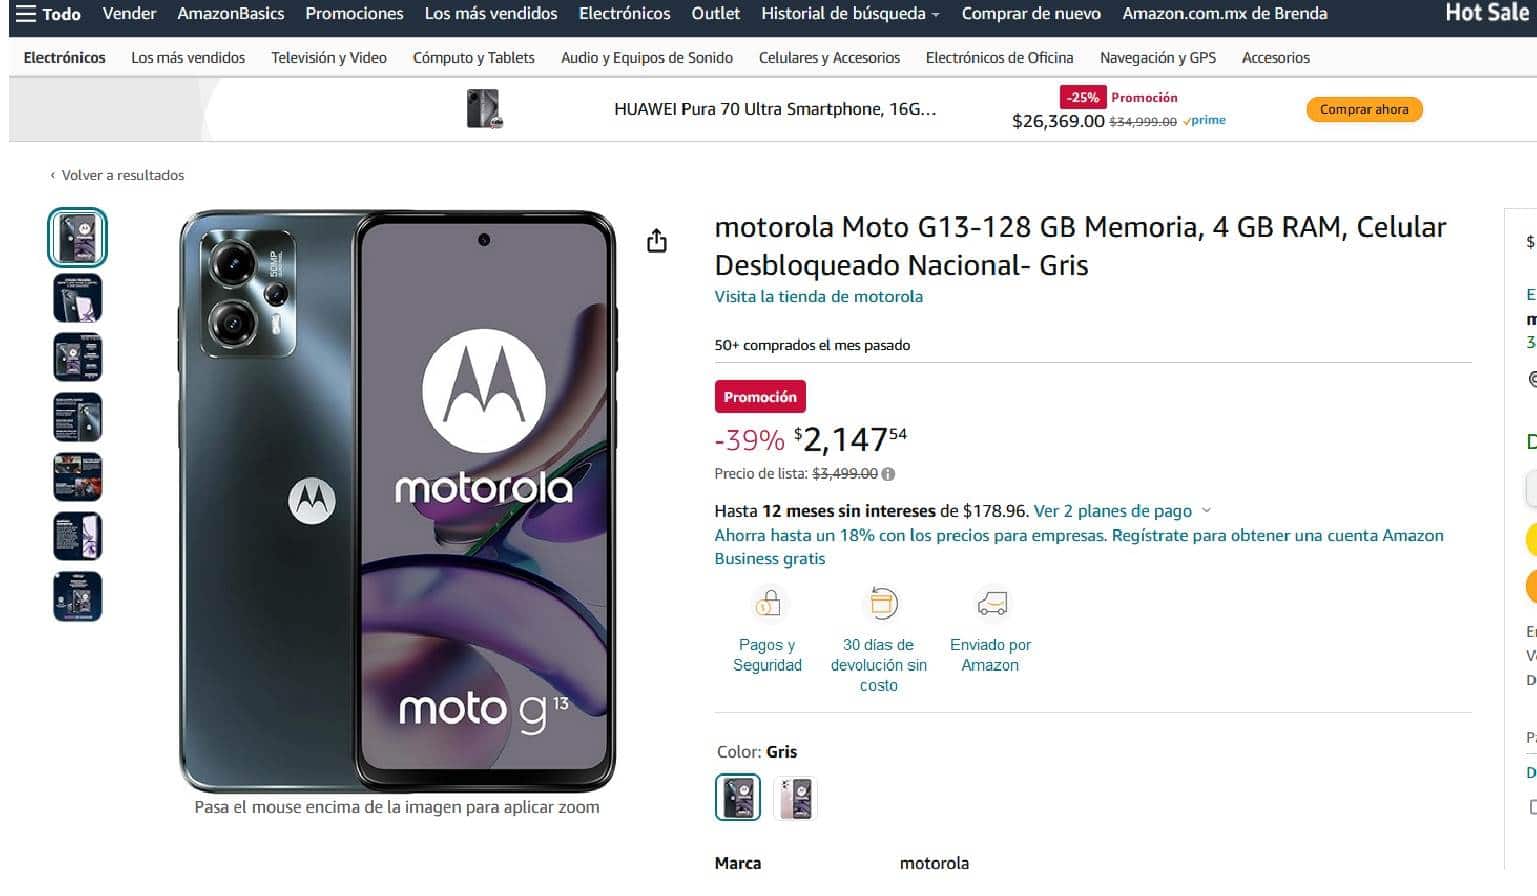  Motorola Moto G13 en oferta en Amazon